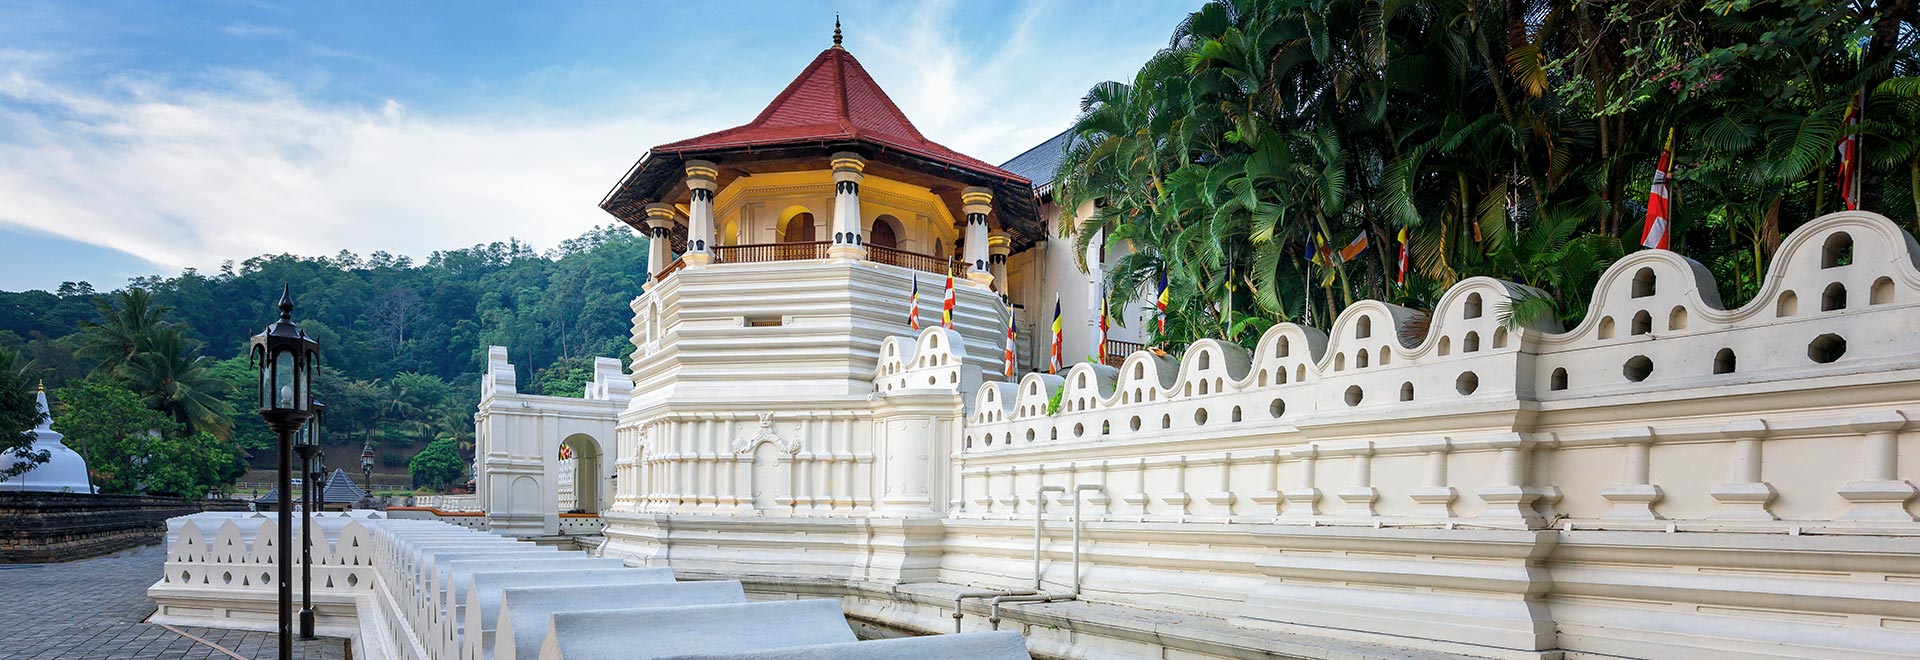 Asia Sri Lanka Splendors Spice Island Kandy Temple Tooth m